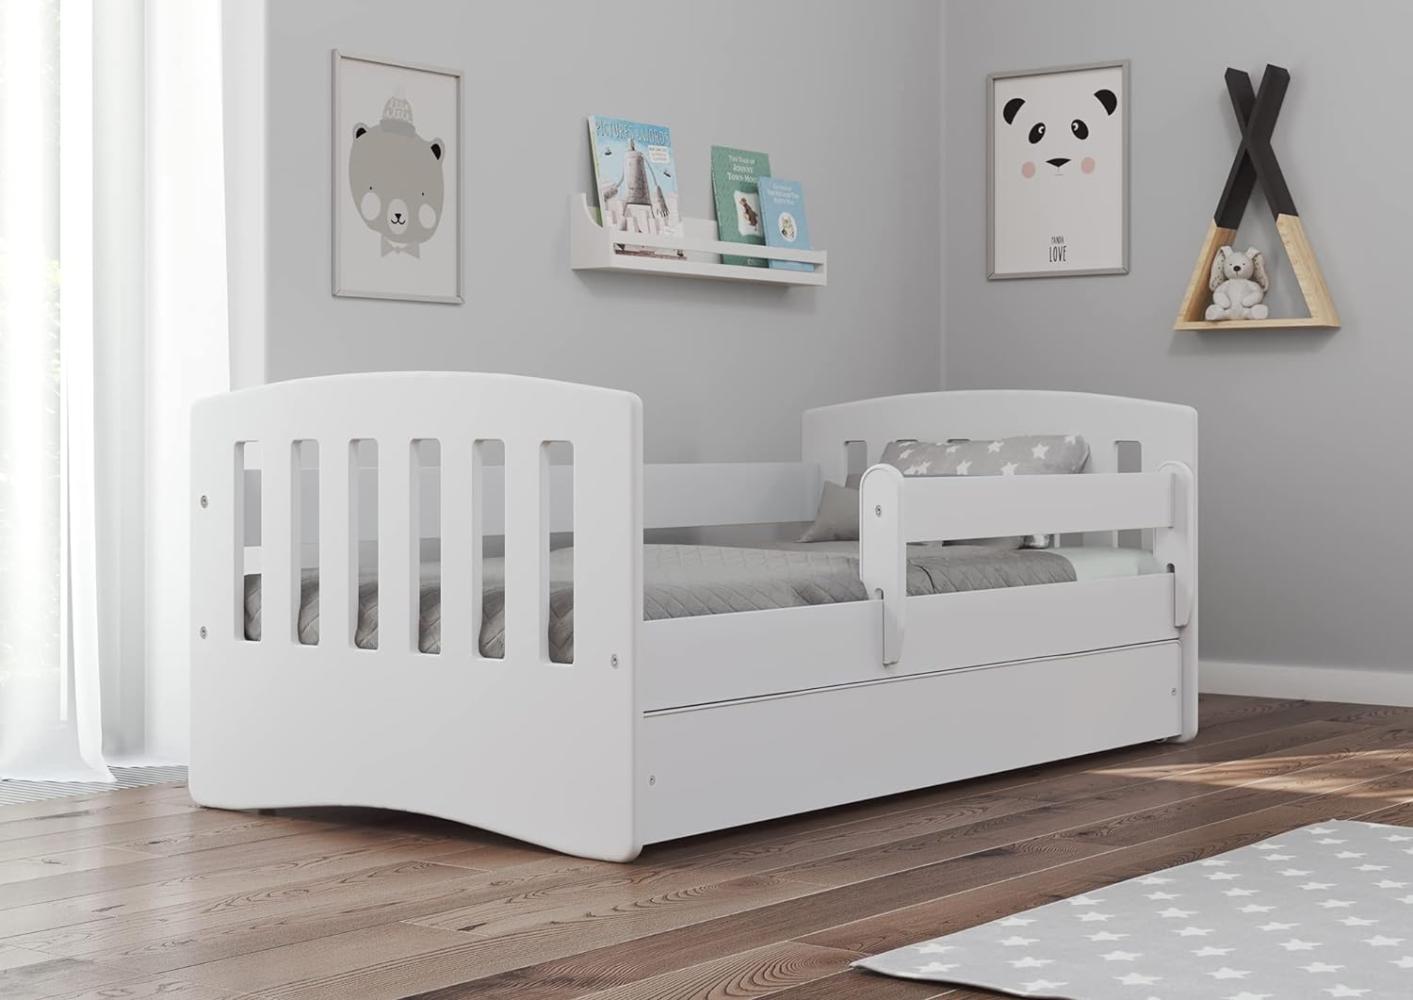 Bjird 'Classic' Kinderbett 80 x 140 cm, Weiß, inkl. Rausfallschutz, Lattenrost und Bettschublade Bild 1